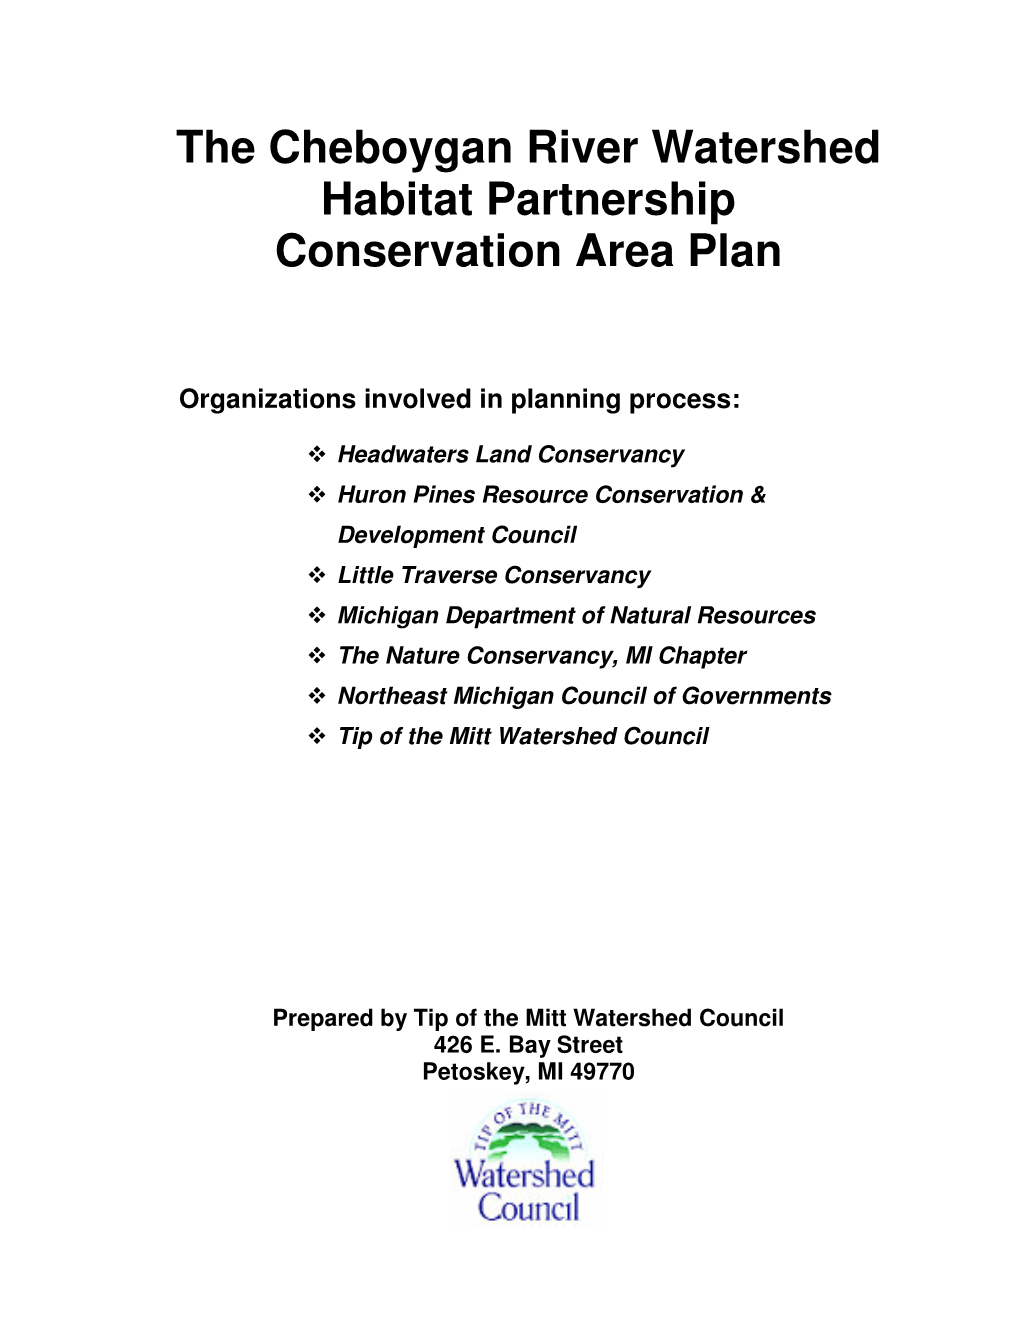 The Cheboygan River Watershed Habitat Partnership Conservation Area Plan